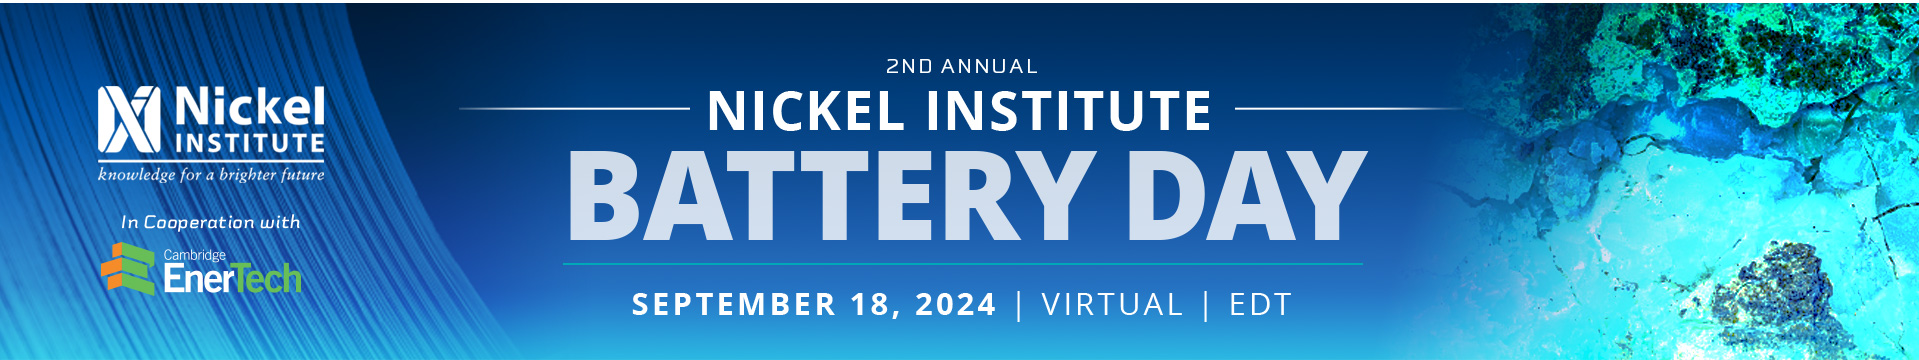 Nickel Institute Battery Day 2024 Hero Banner